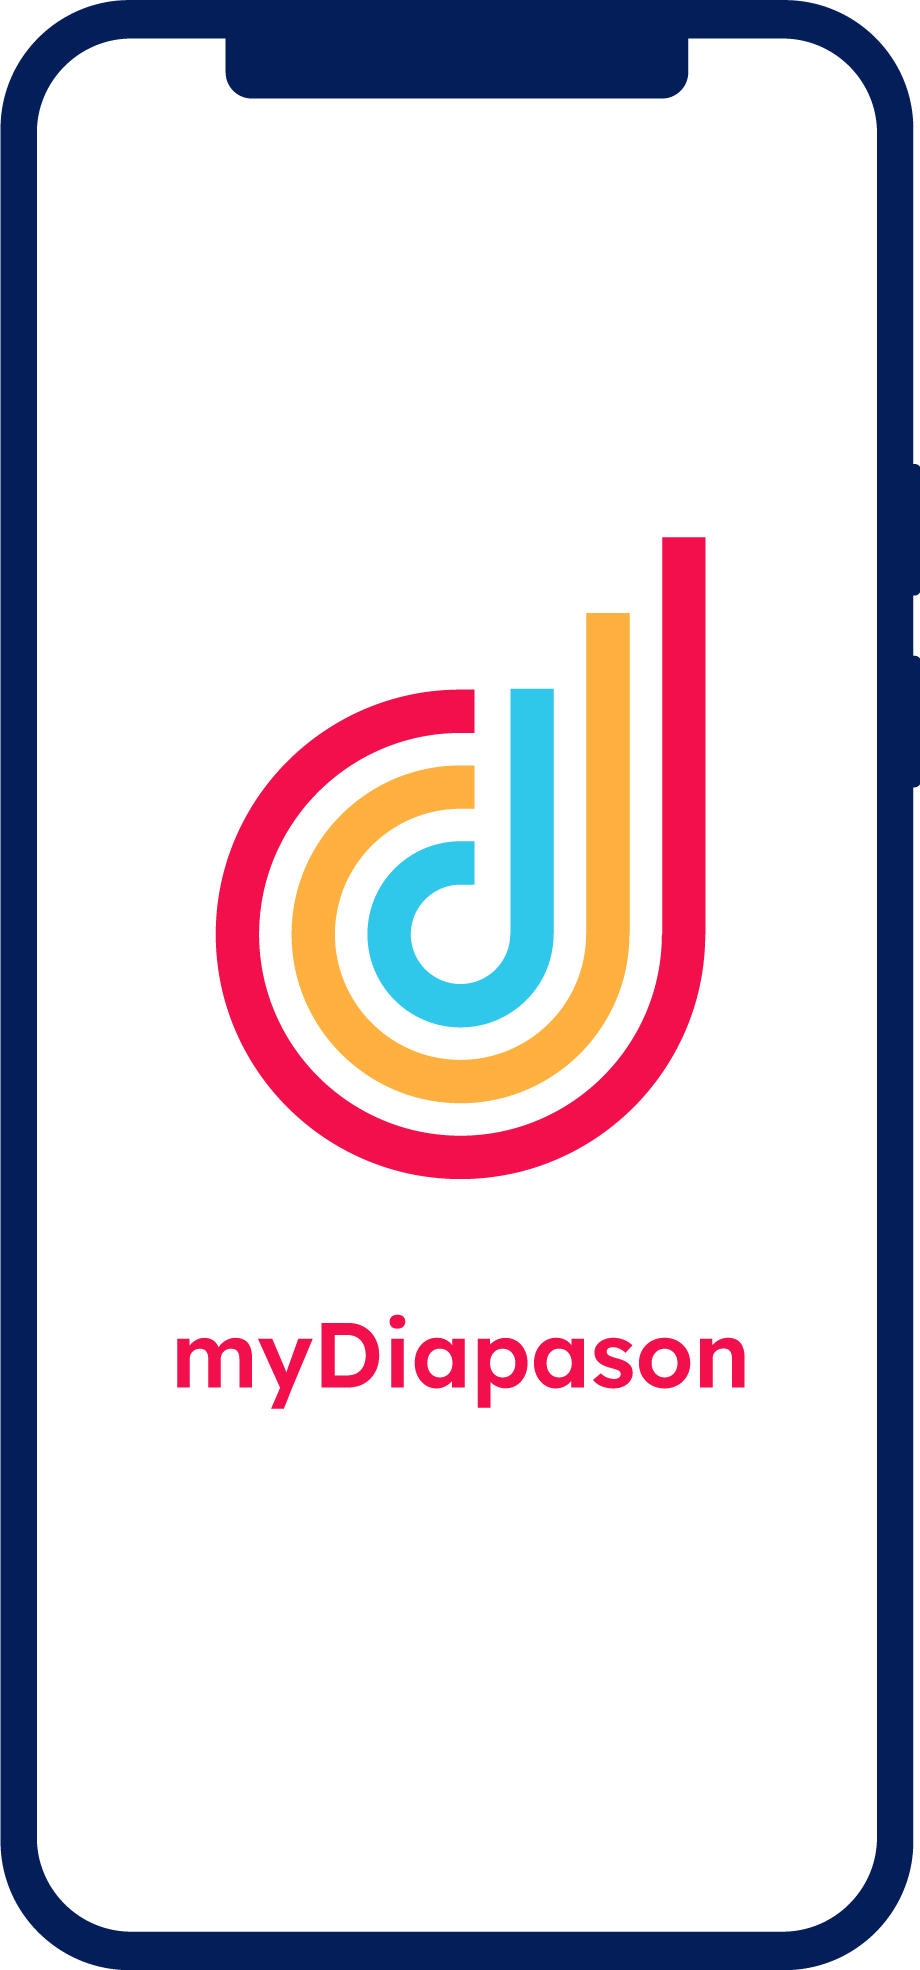 myDiapason Iphone